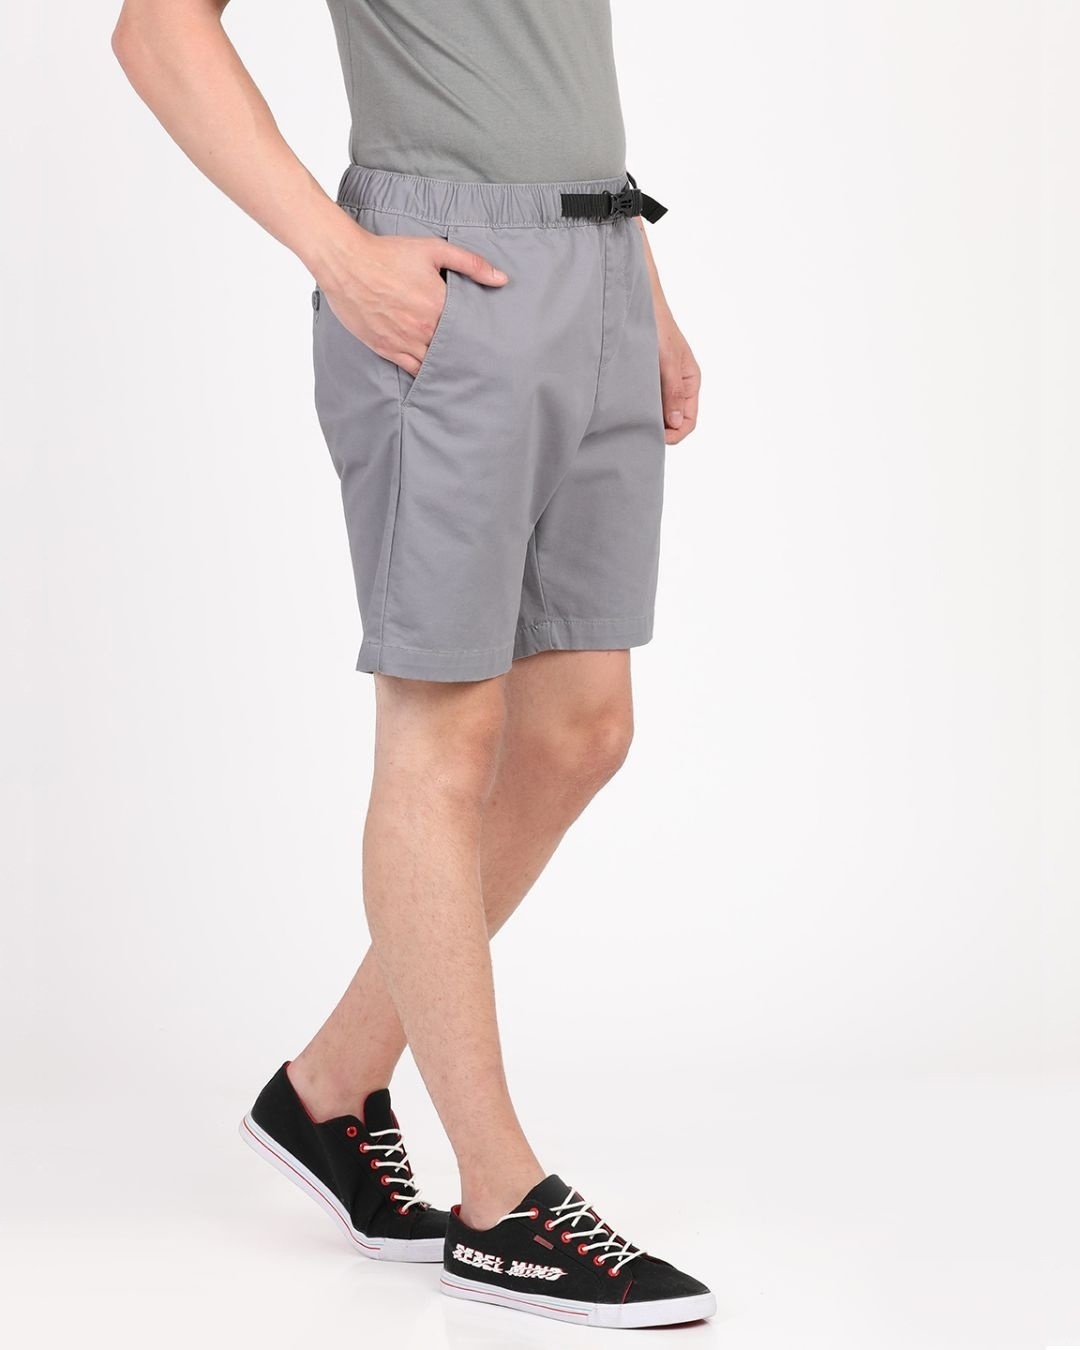 Buy Men's Grey Slim Fit Cotton Shorts for Men Grey Online at Bewakoof